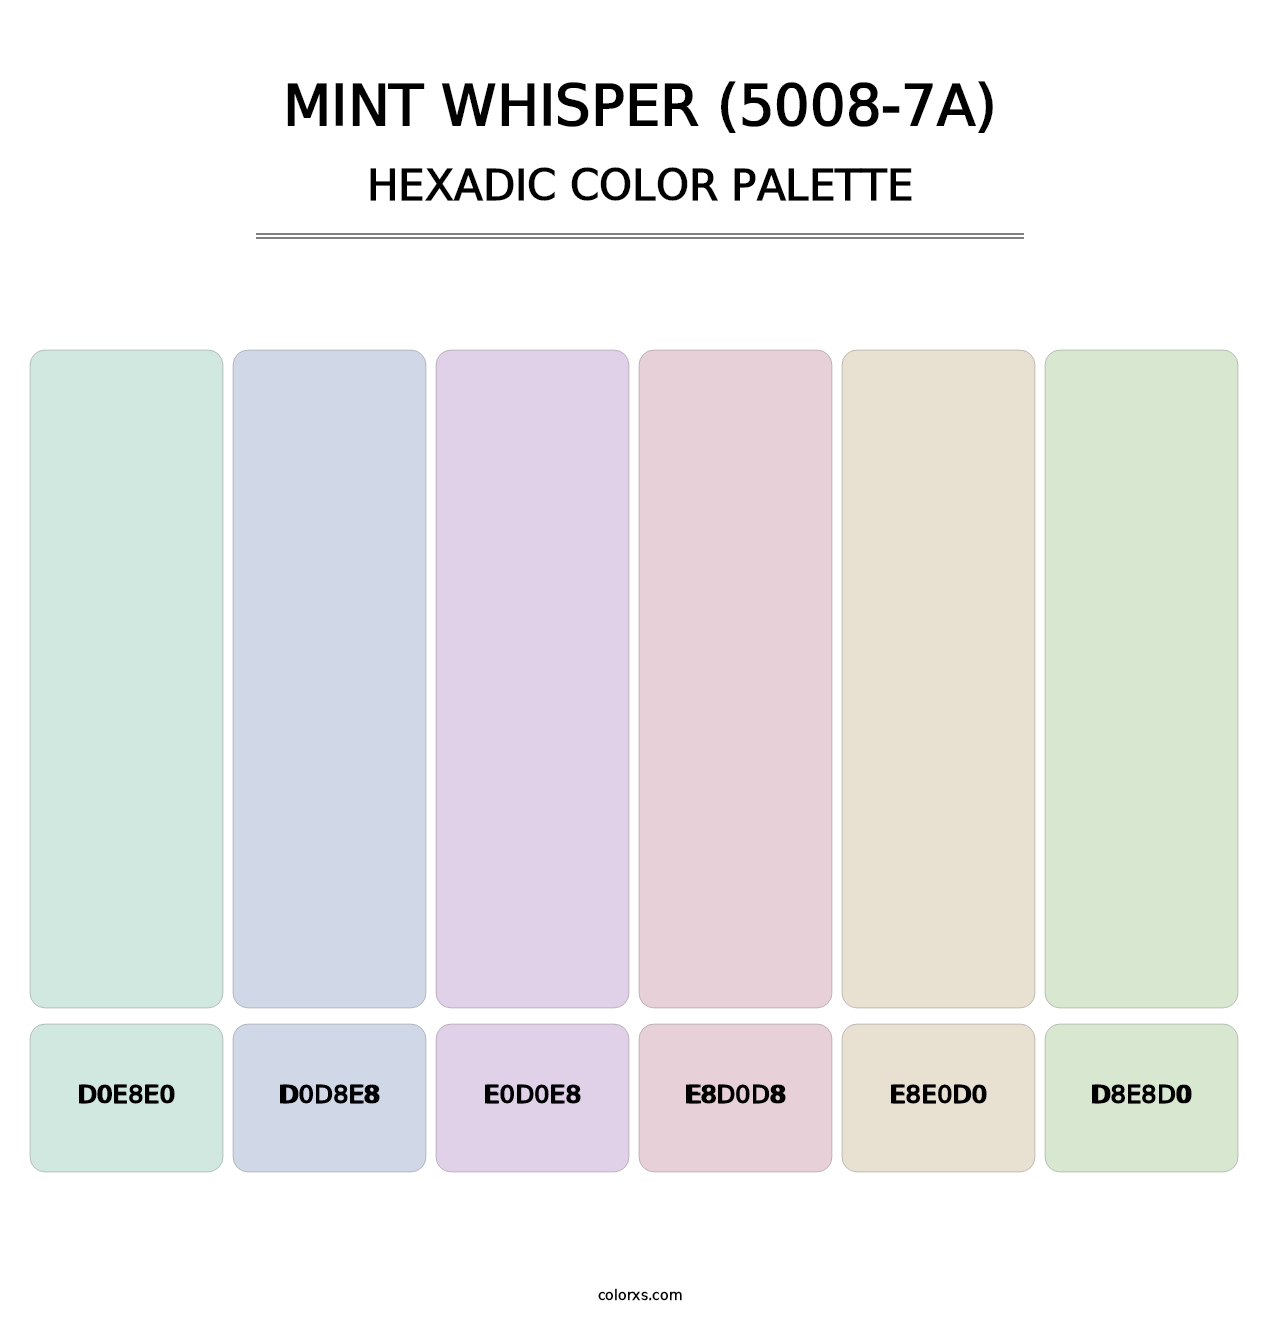 Mint Whisper (5008-7A) - Hexadic Color Palette